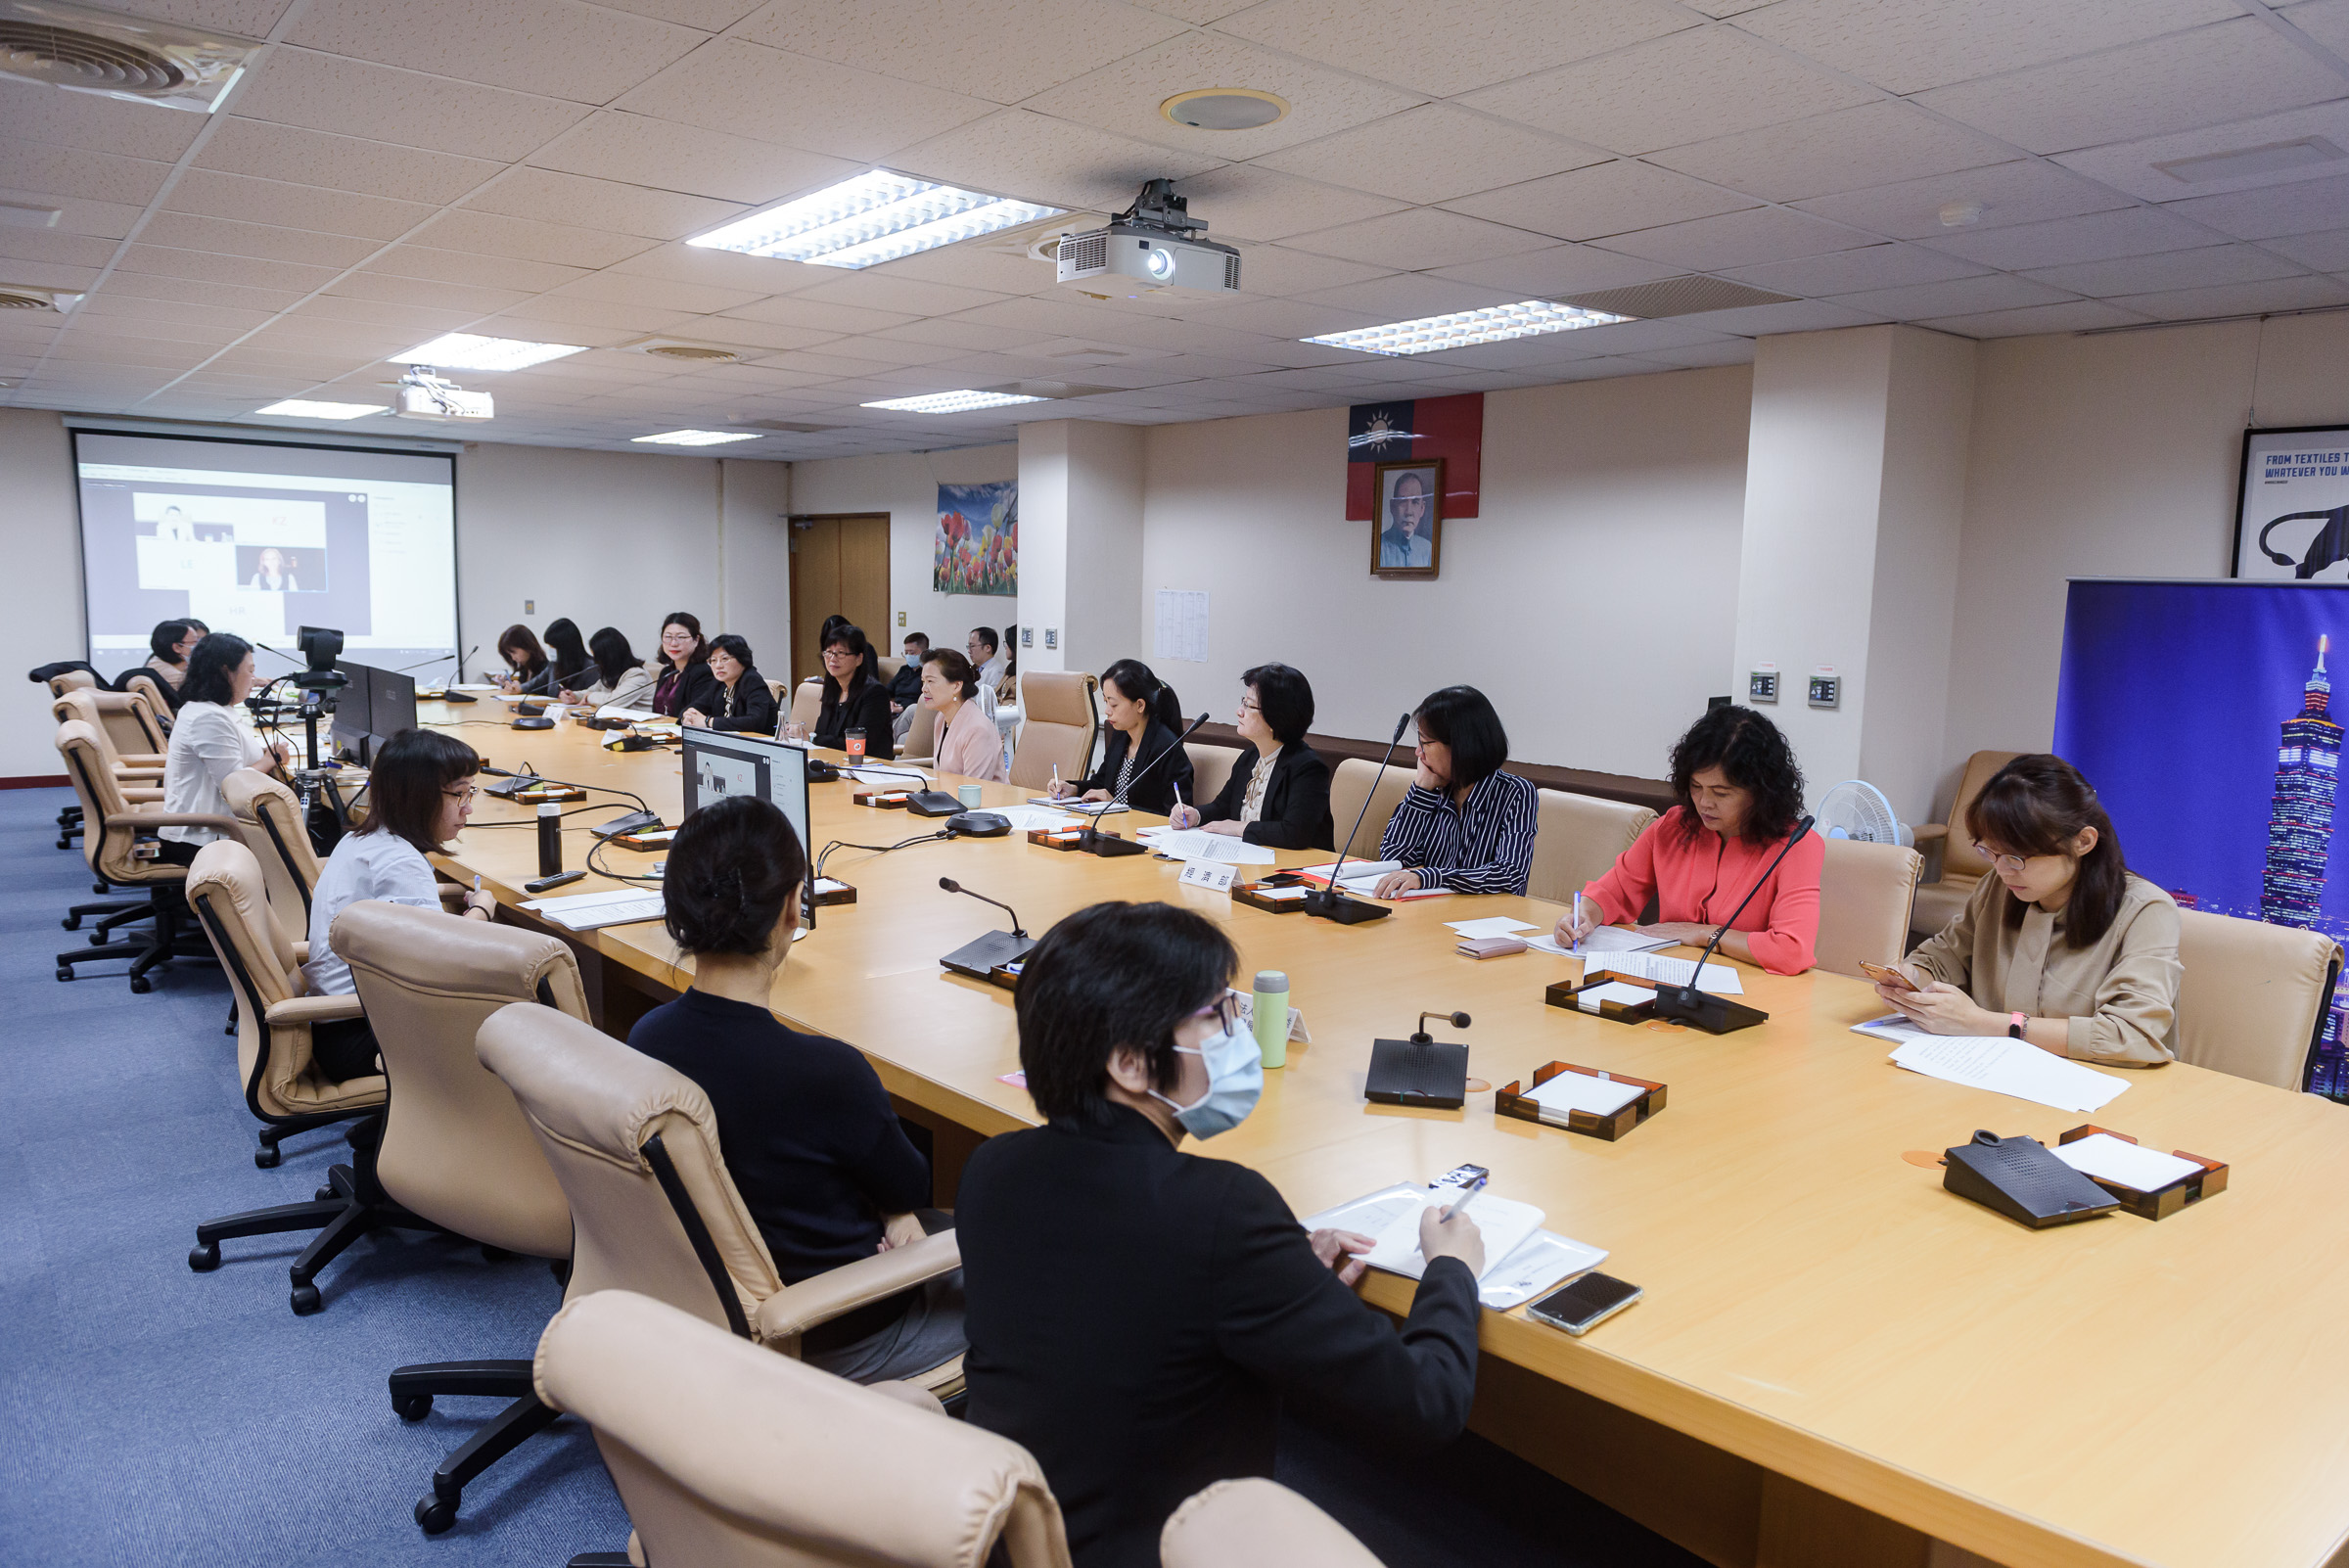  Wang Mei-Hua, Menteri Ekonomi Taiwan, menghadiri Forum Wanita dan Ekonomi APEC. Sumber: Komisi Kesetaraan Gender Yuan Eksekutif (行政院性別平等)